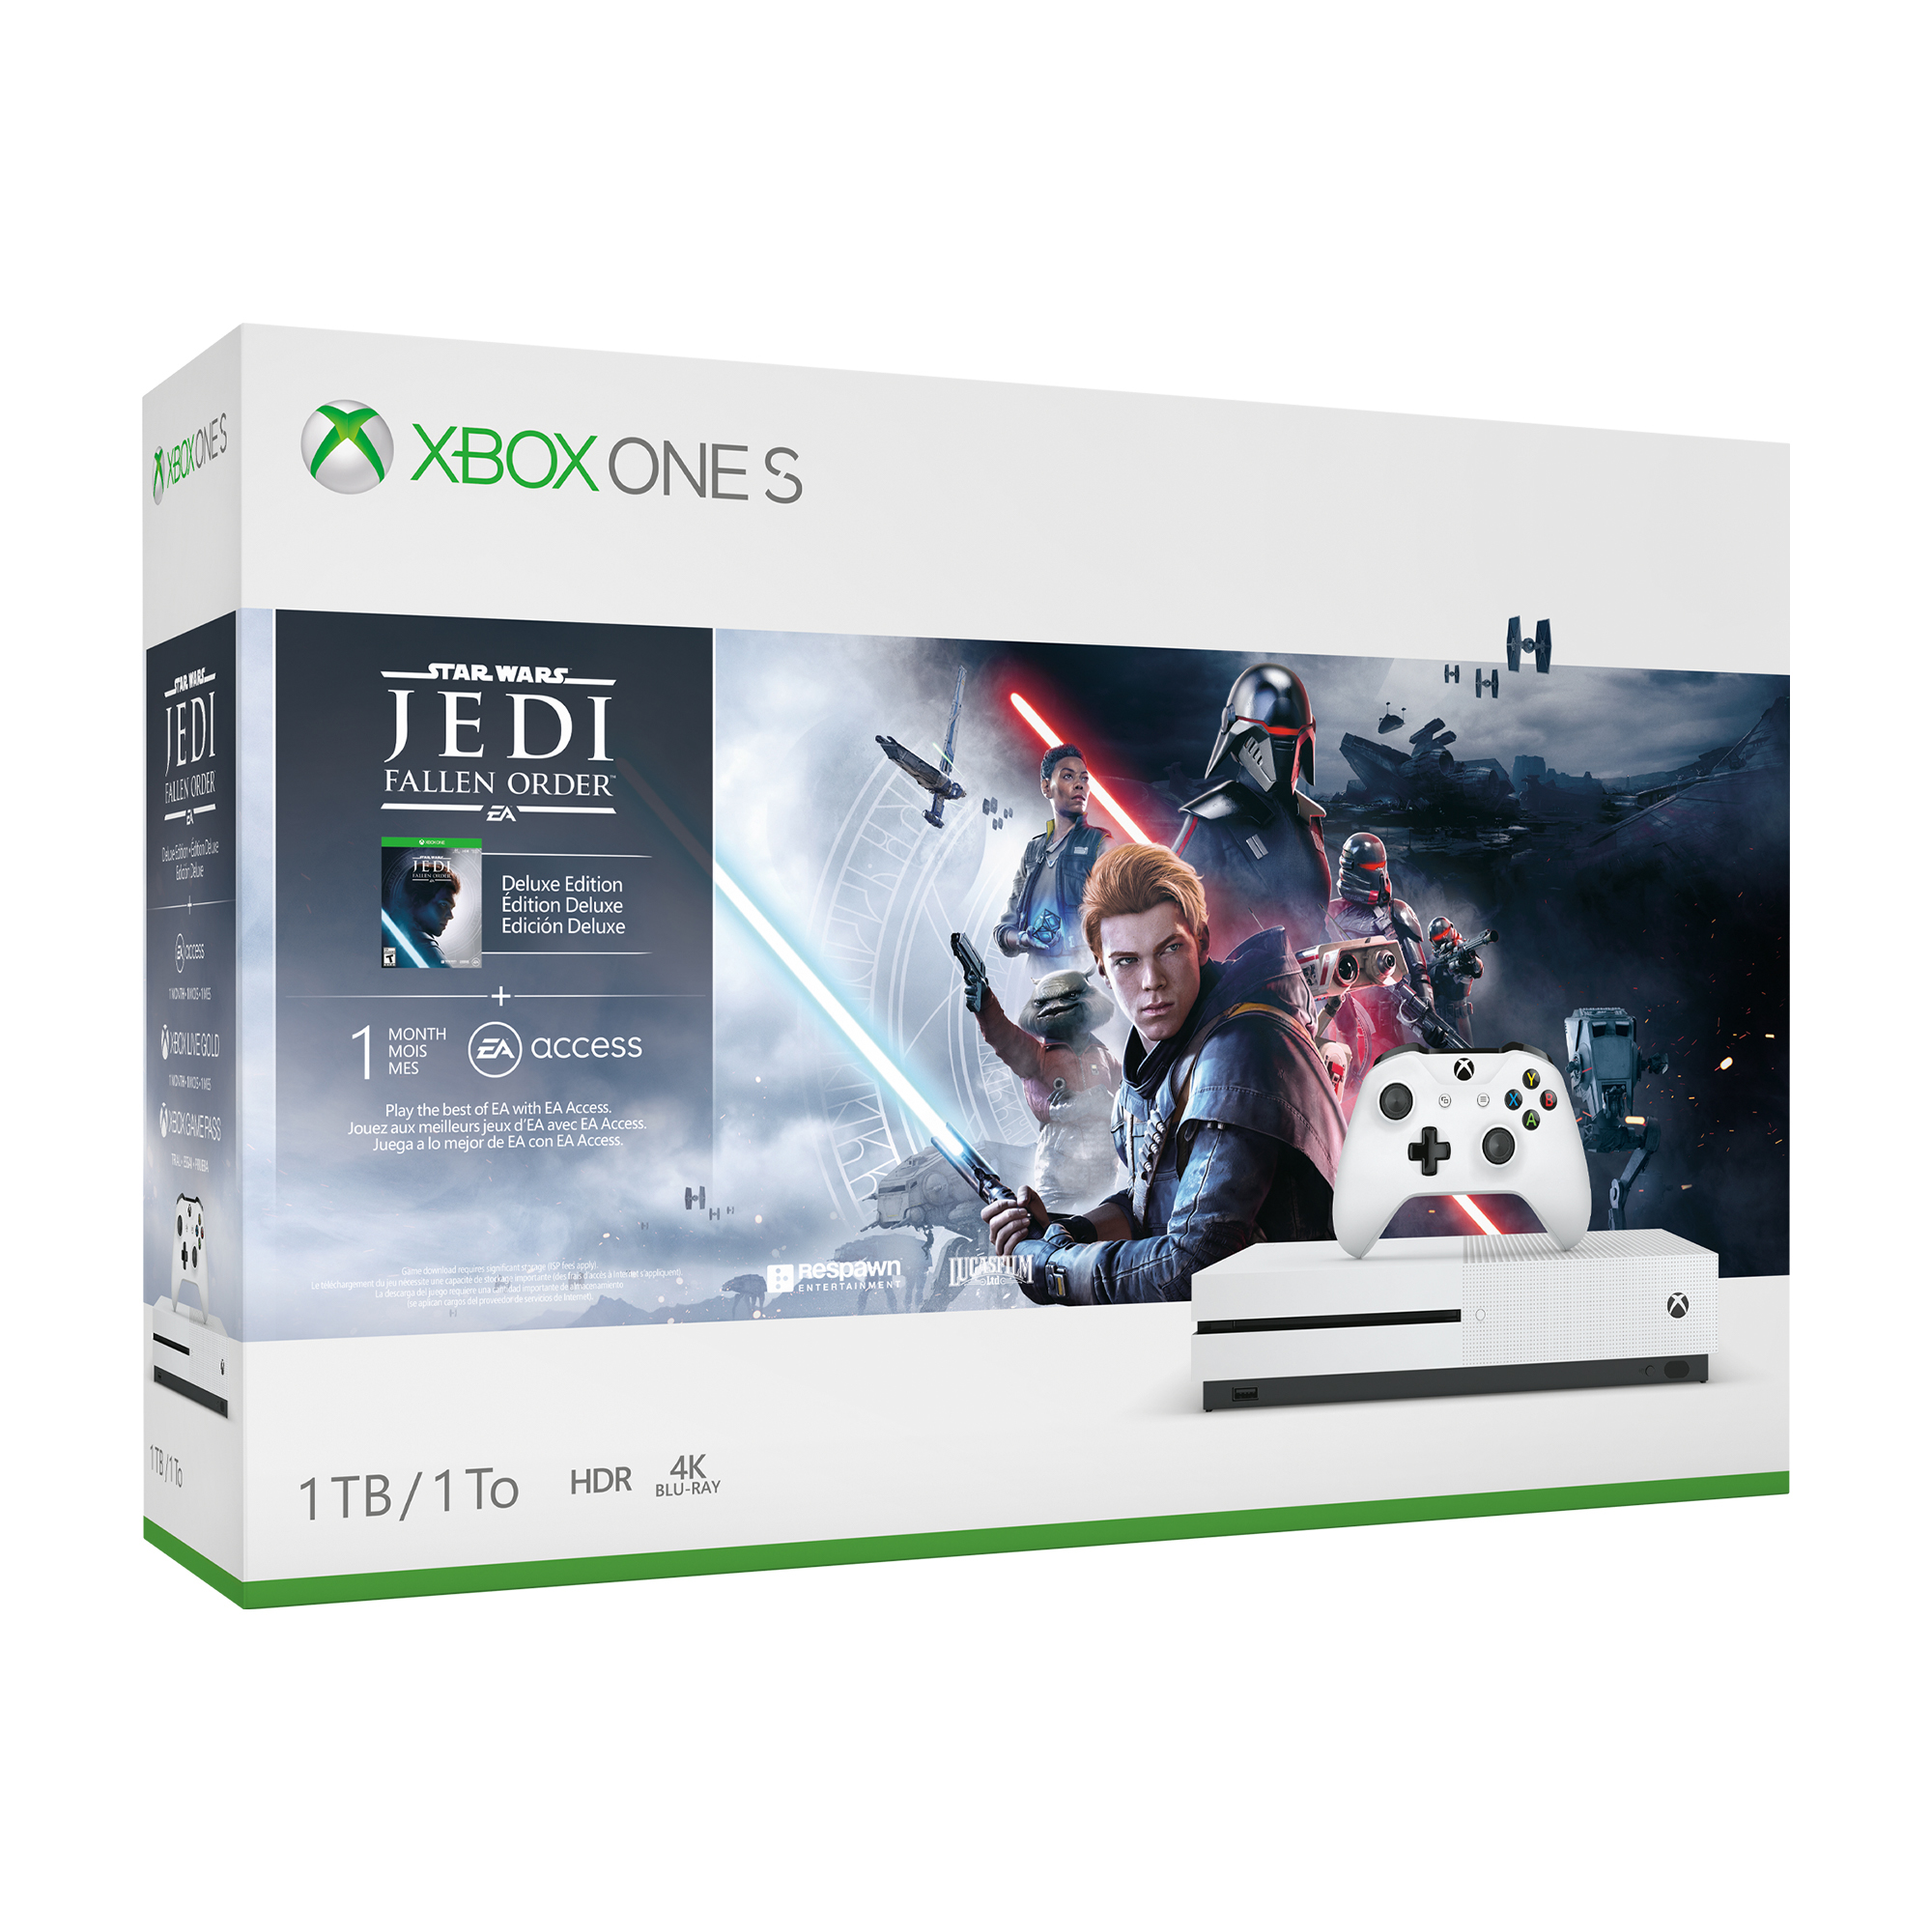 Microsoft Xbox One S 1TB Star Wars Jedi: Fallen Order Console Bundle, White, 234-01089 - image 1 of 12